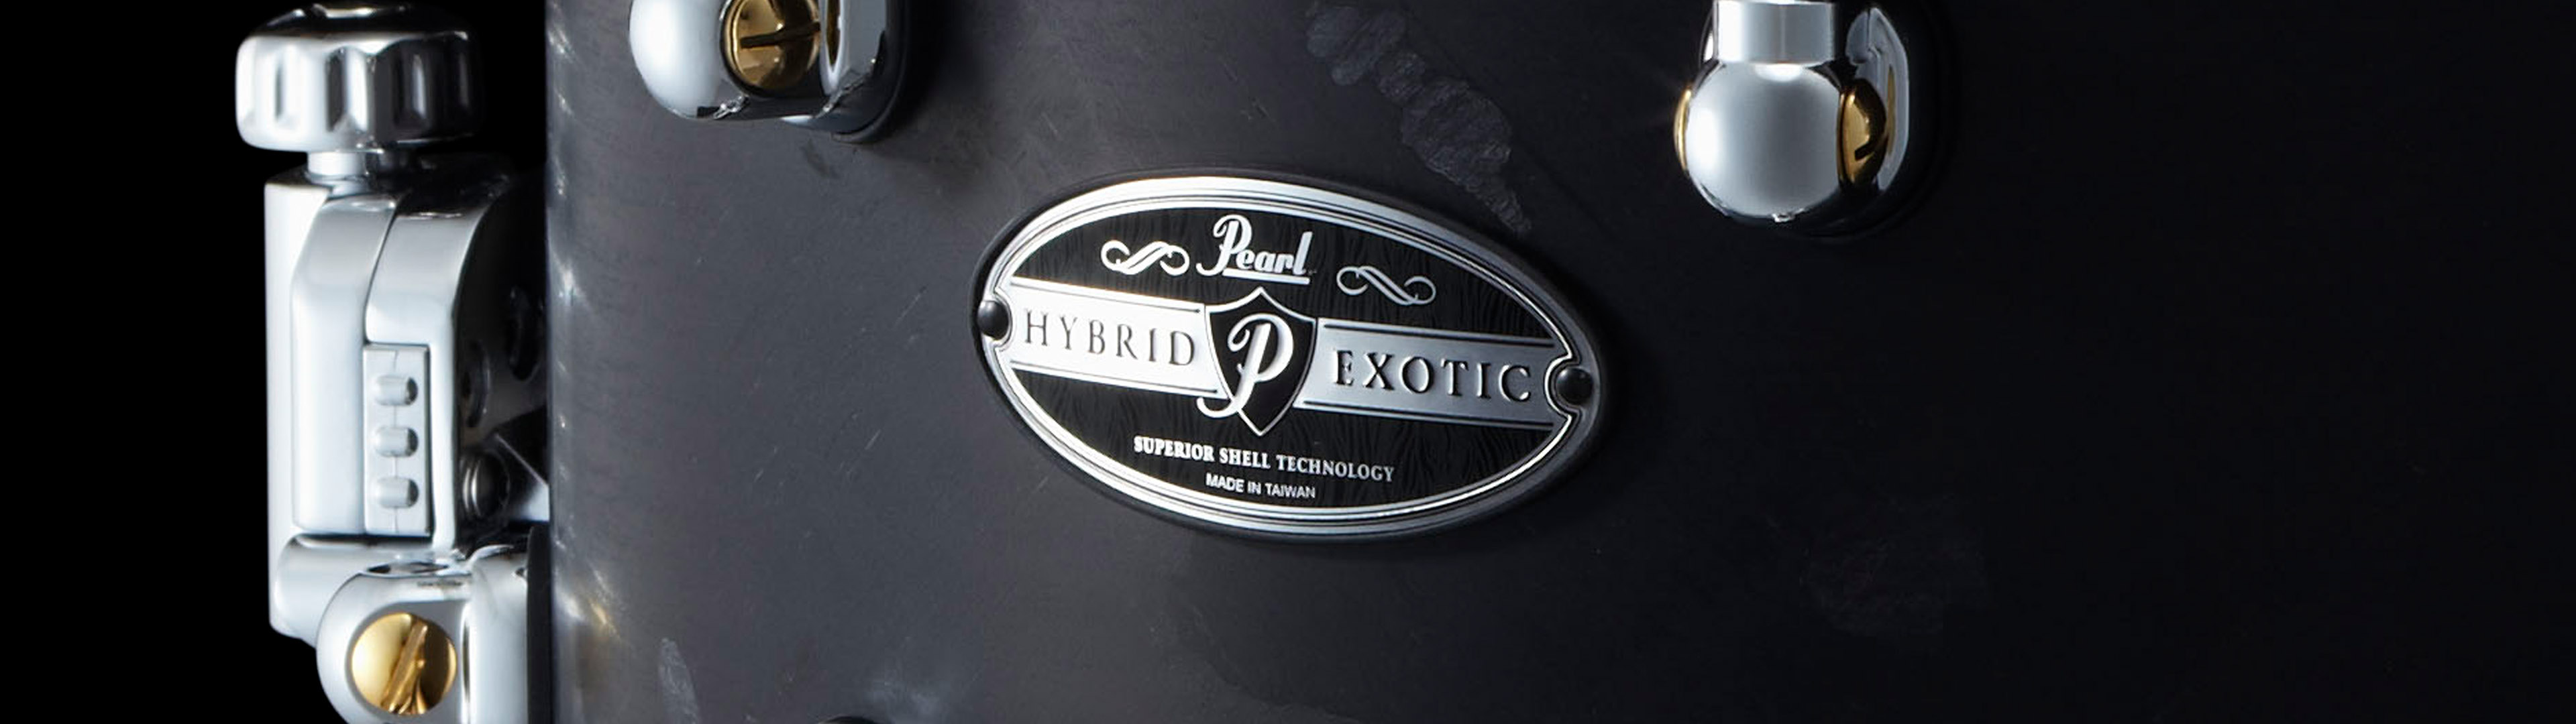 hybrid exotic